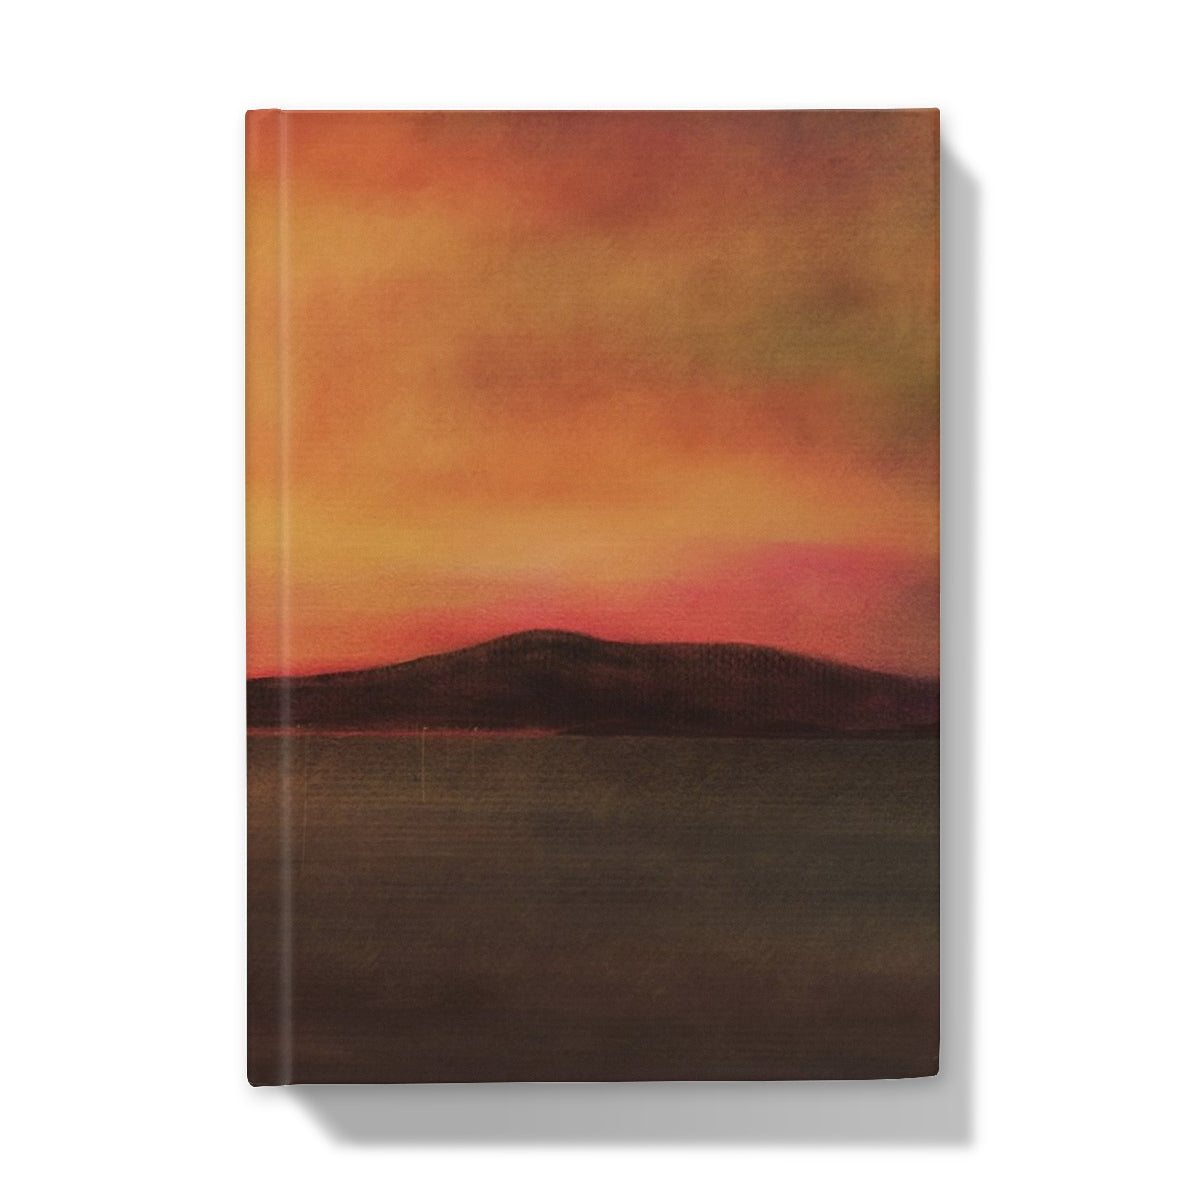 Harris Sunset Art Gifts Hardback Journal-Journals & Notebooks-Hebridean Islands Art Gallery-5"x7"-Lined-Paintings, Prints, Homeware, Art Gifts From Scotland By Scottish Artist Kevin Hunter